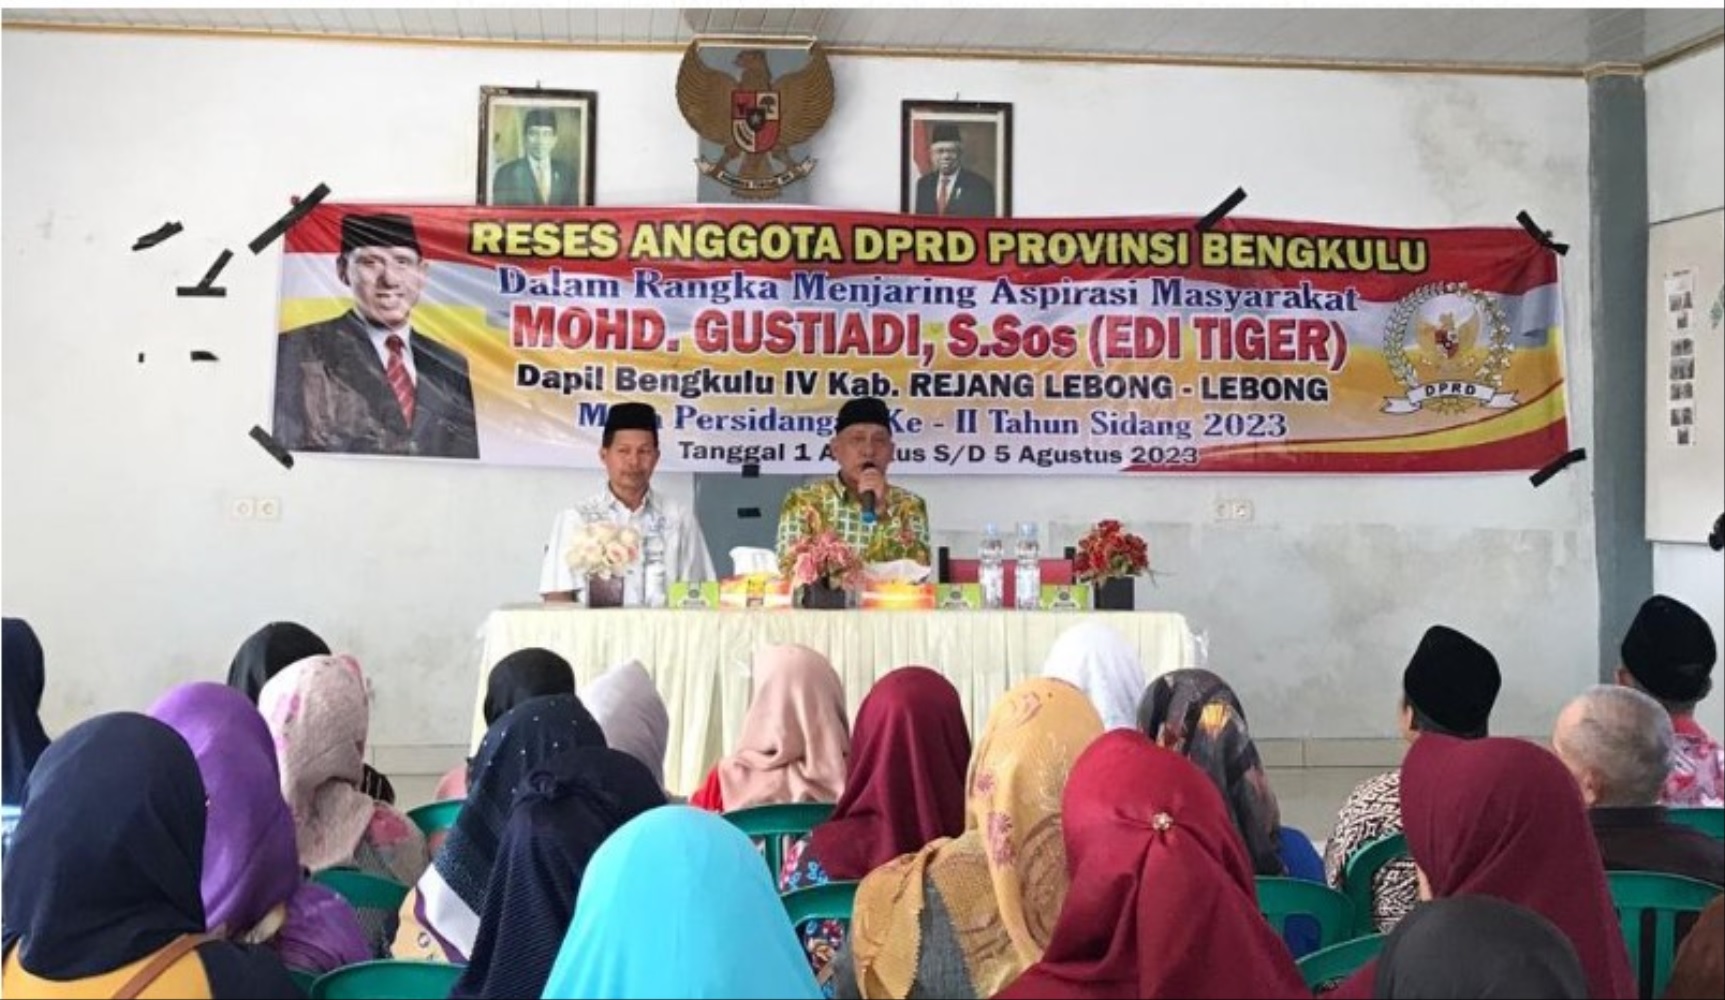 Anggota DPRD Prov Bengkulu, Mohd Gustiadi Kembali Melaksanakan Reses di Desa Rimbo Recap